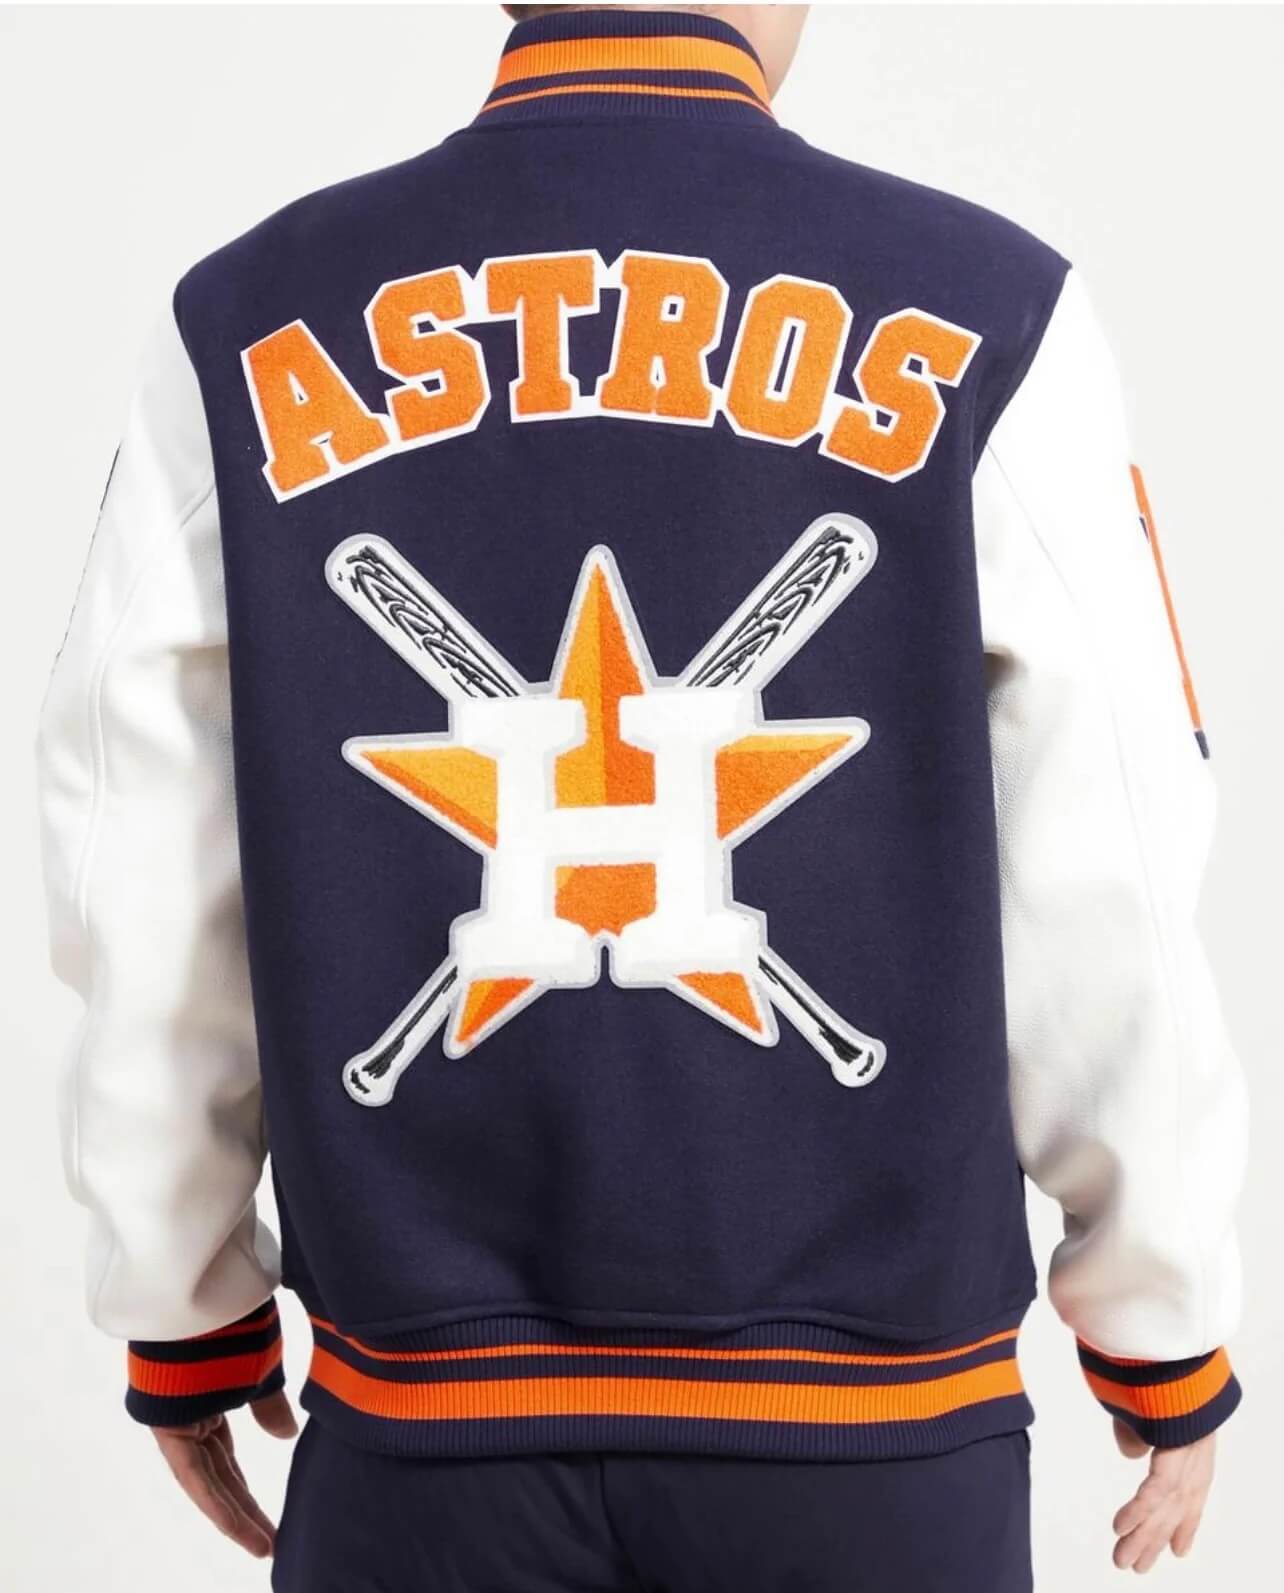 Men's Blue and Orange Houston Astros Letterman Jacket